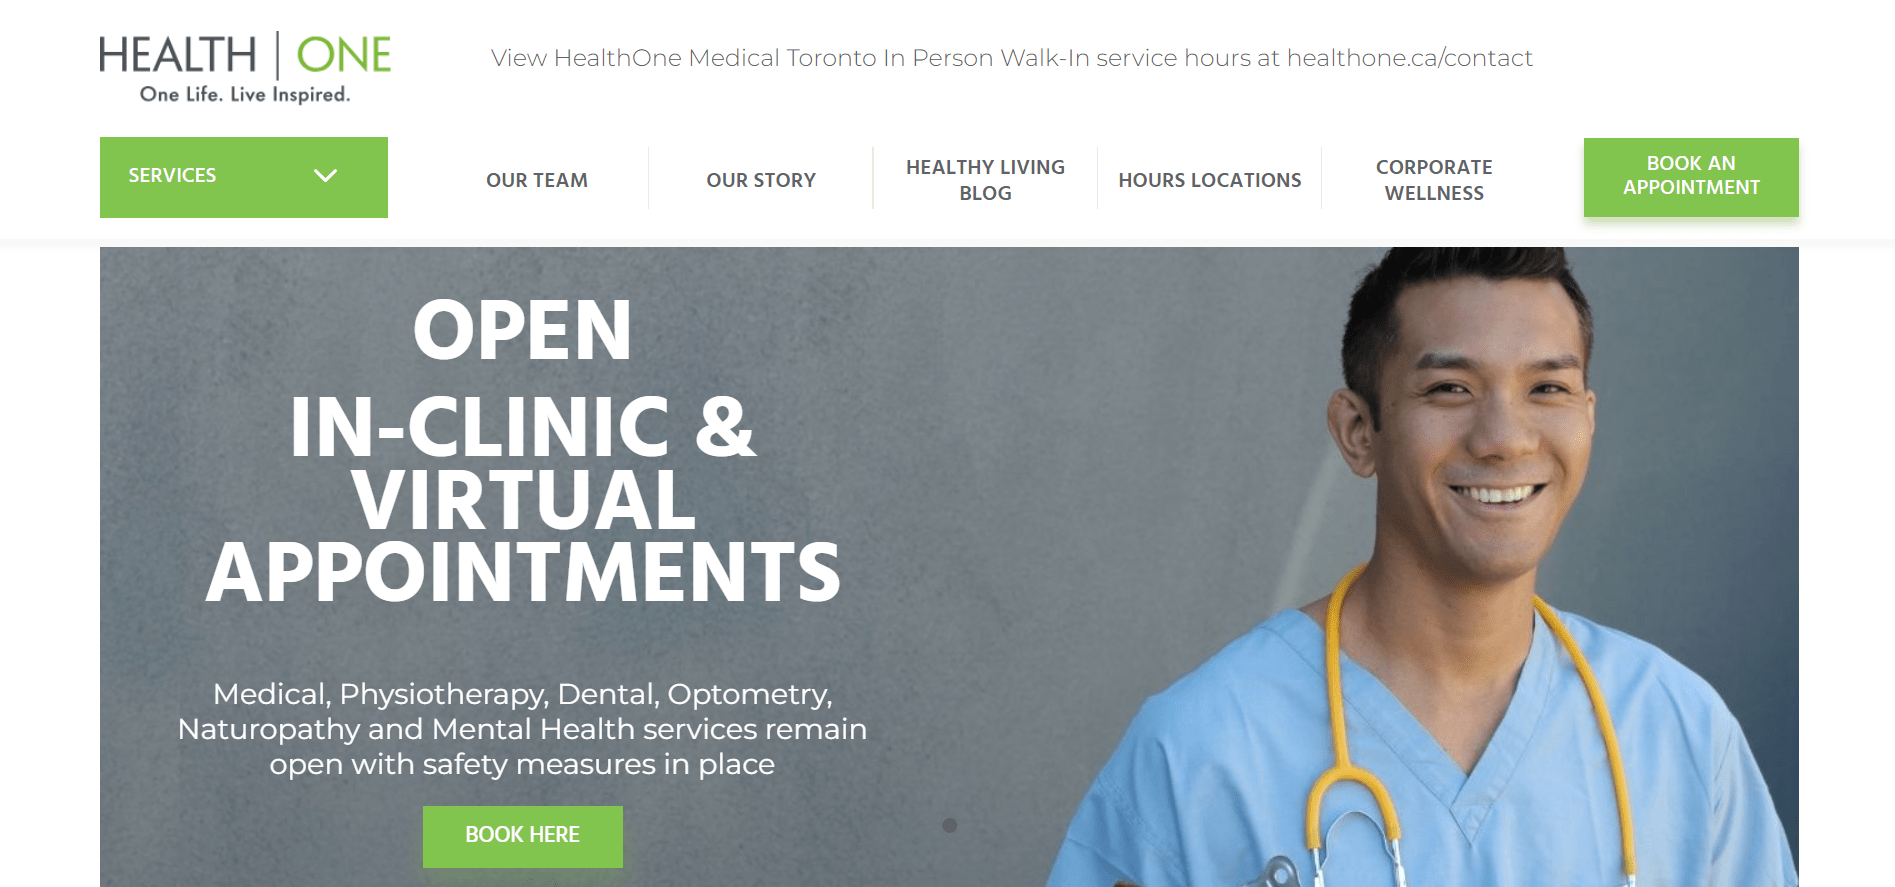 healthone medical toronto homepage screenshot